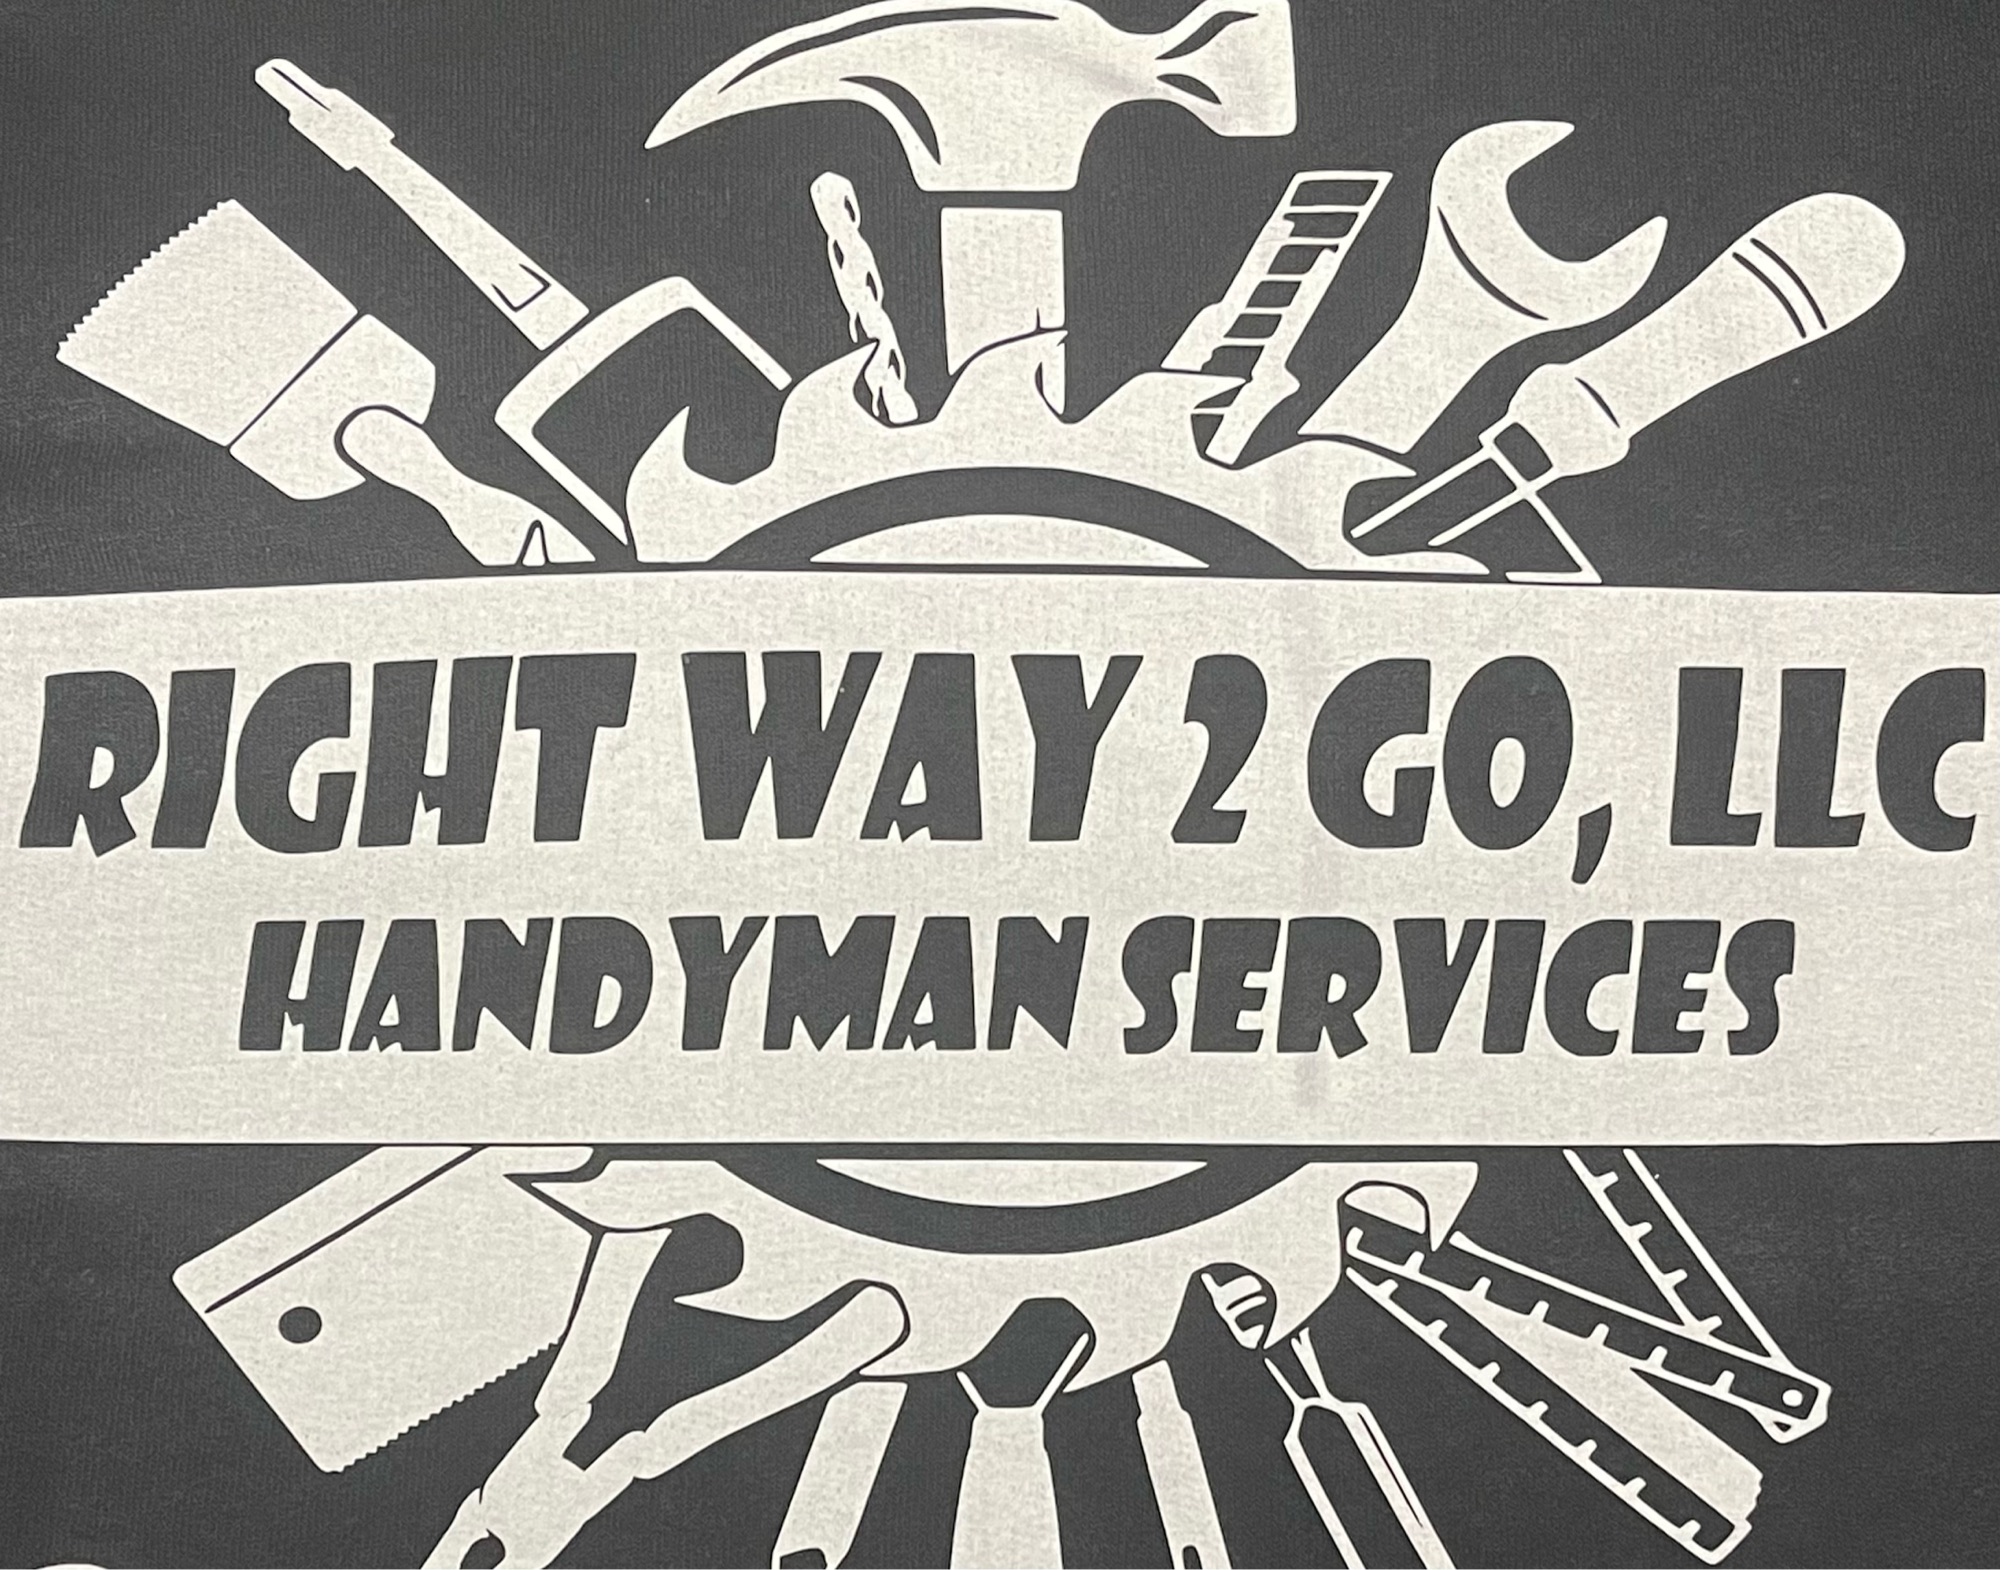 Right Way 2 Go, LLC Logo